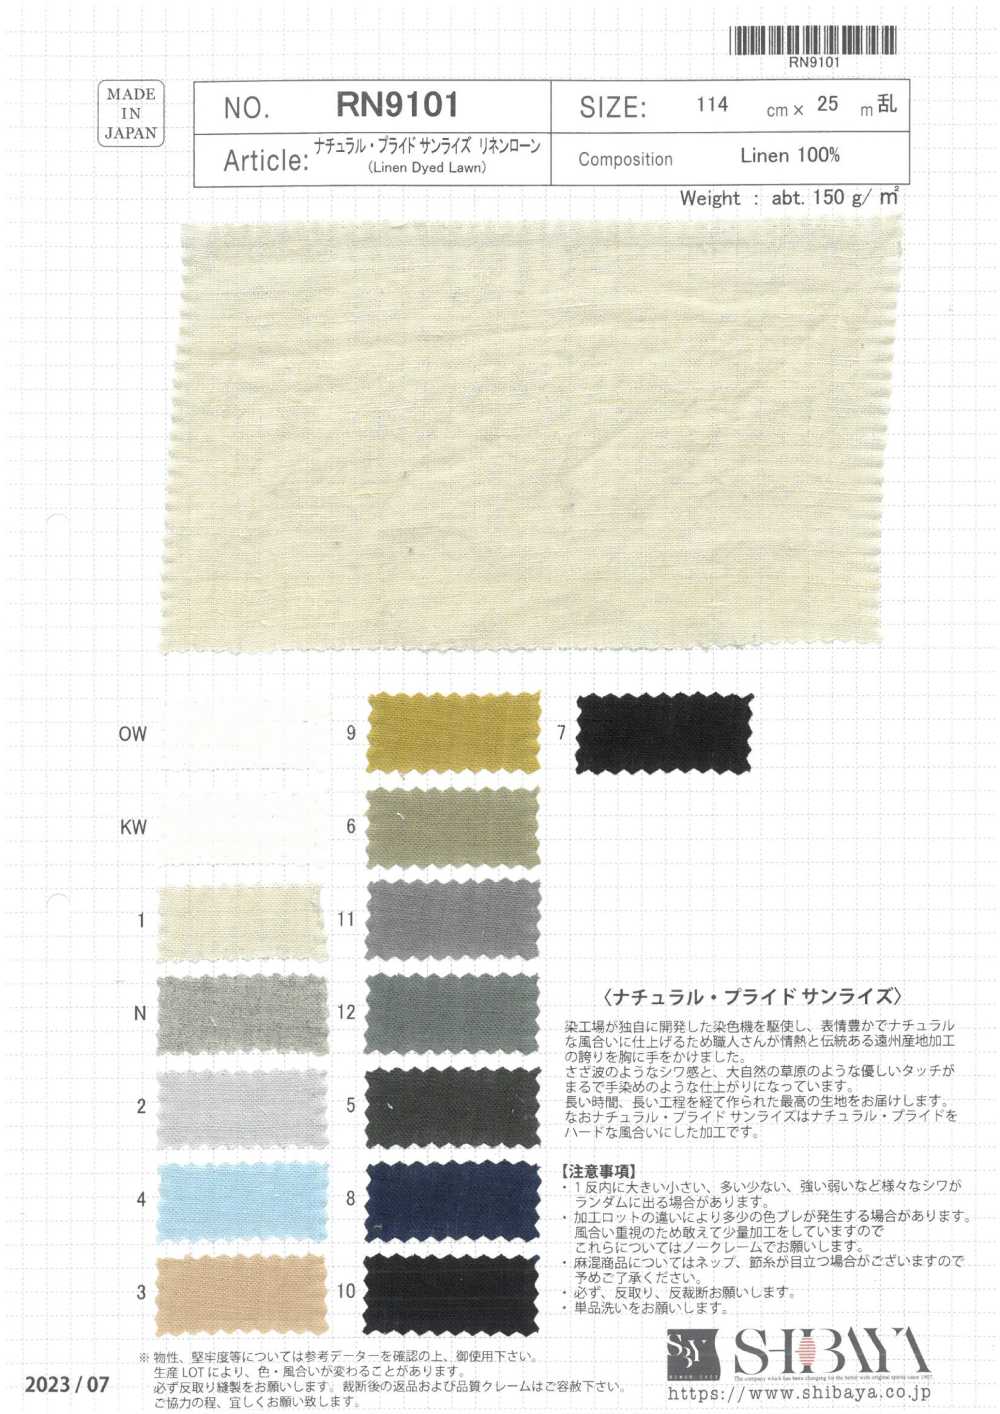 RN9101 Césped De Lino Natural Pride Sunrise[Fabrica Textil] SHIBAYA